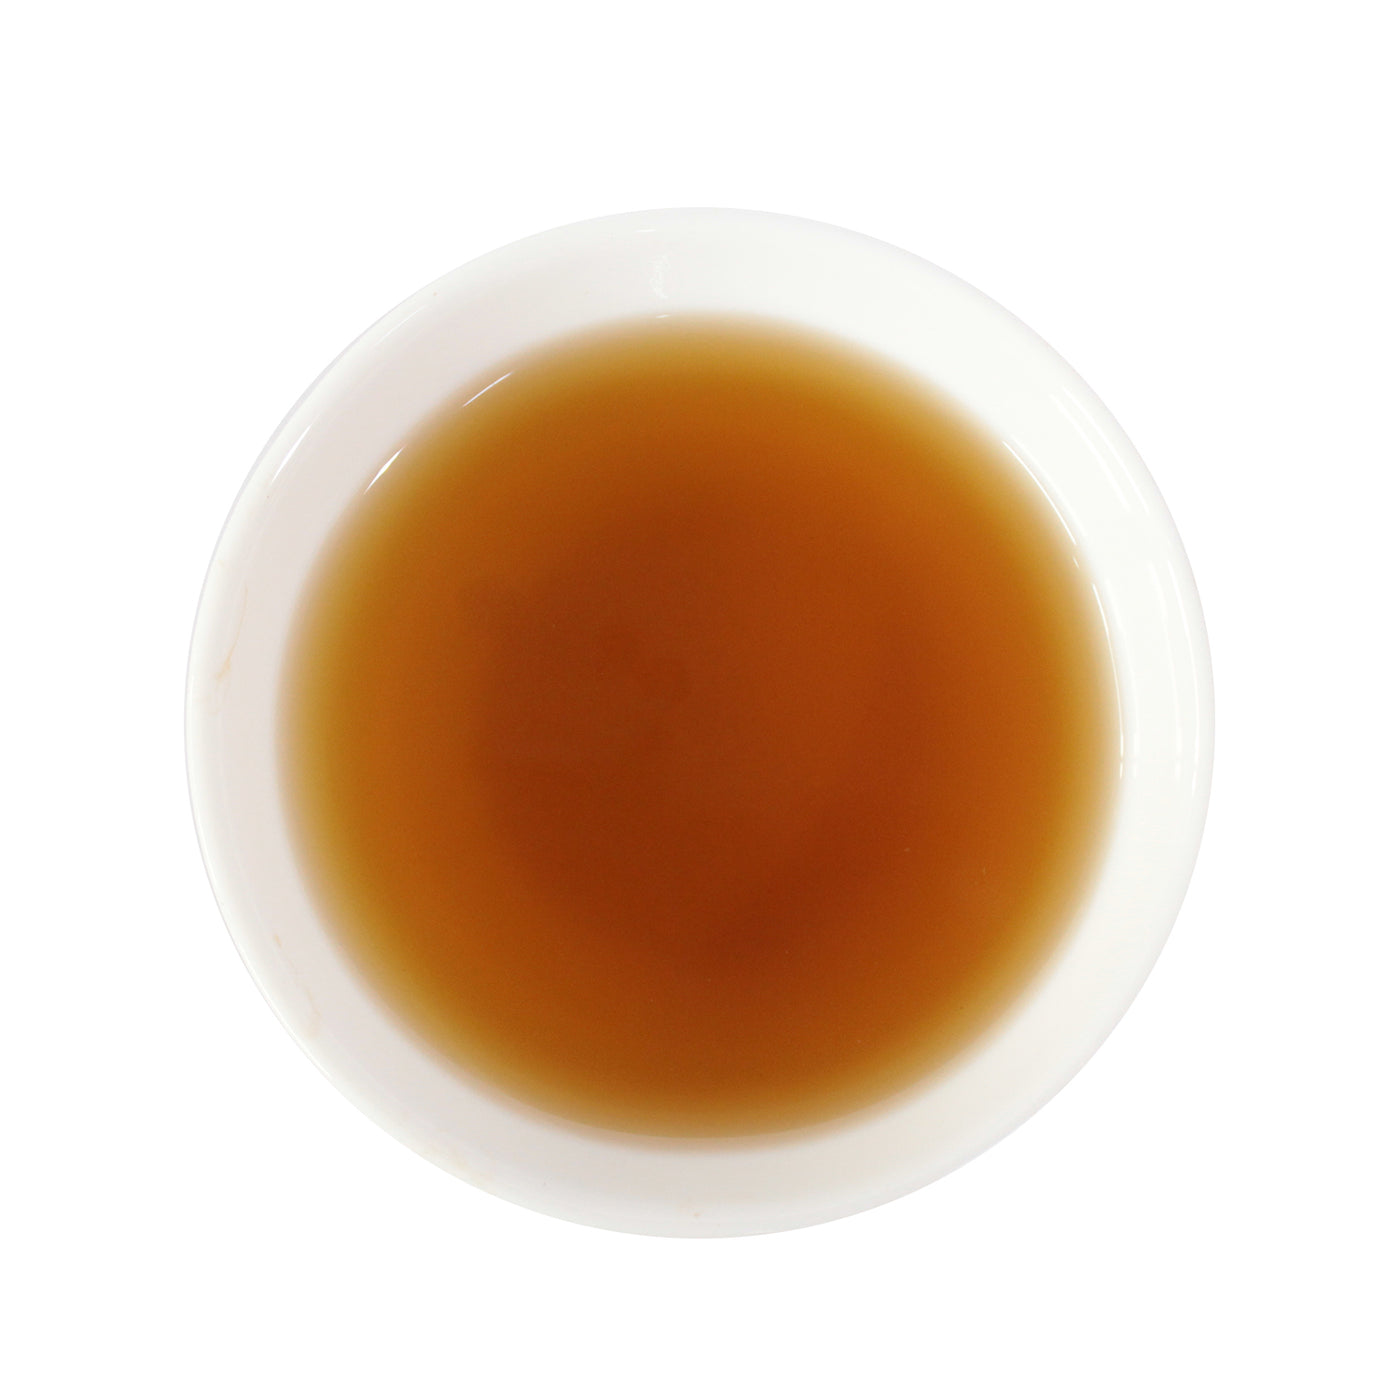 Pita (Pitta) Herbal Tea